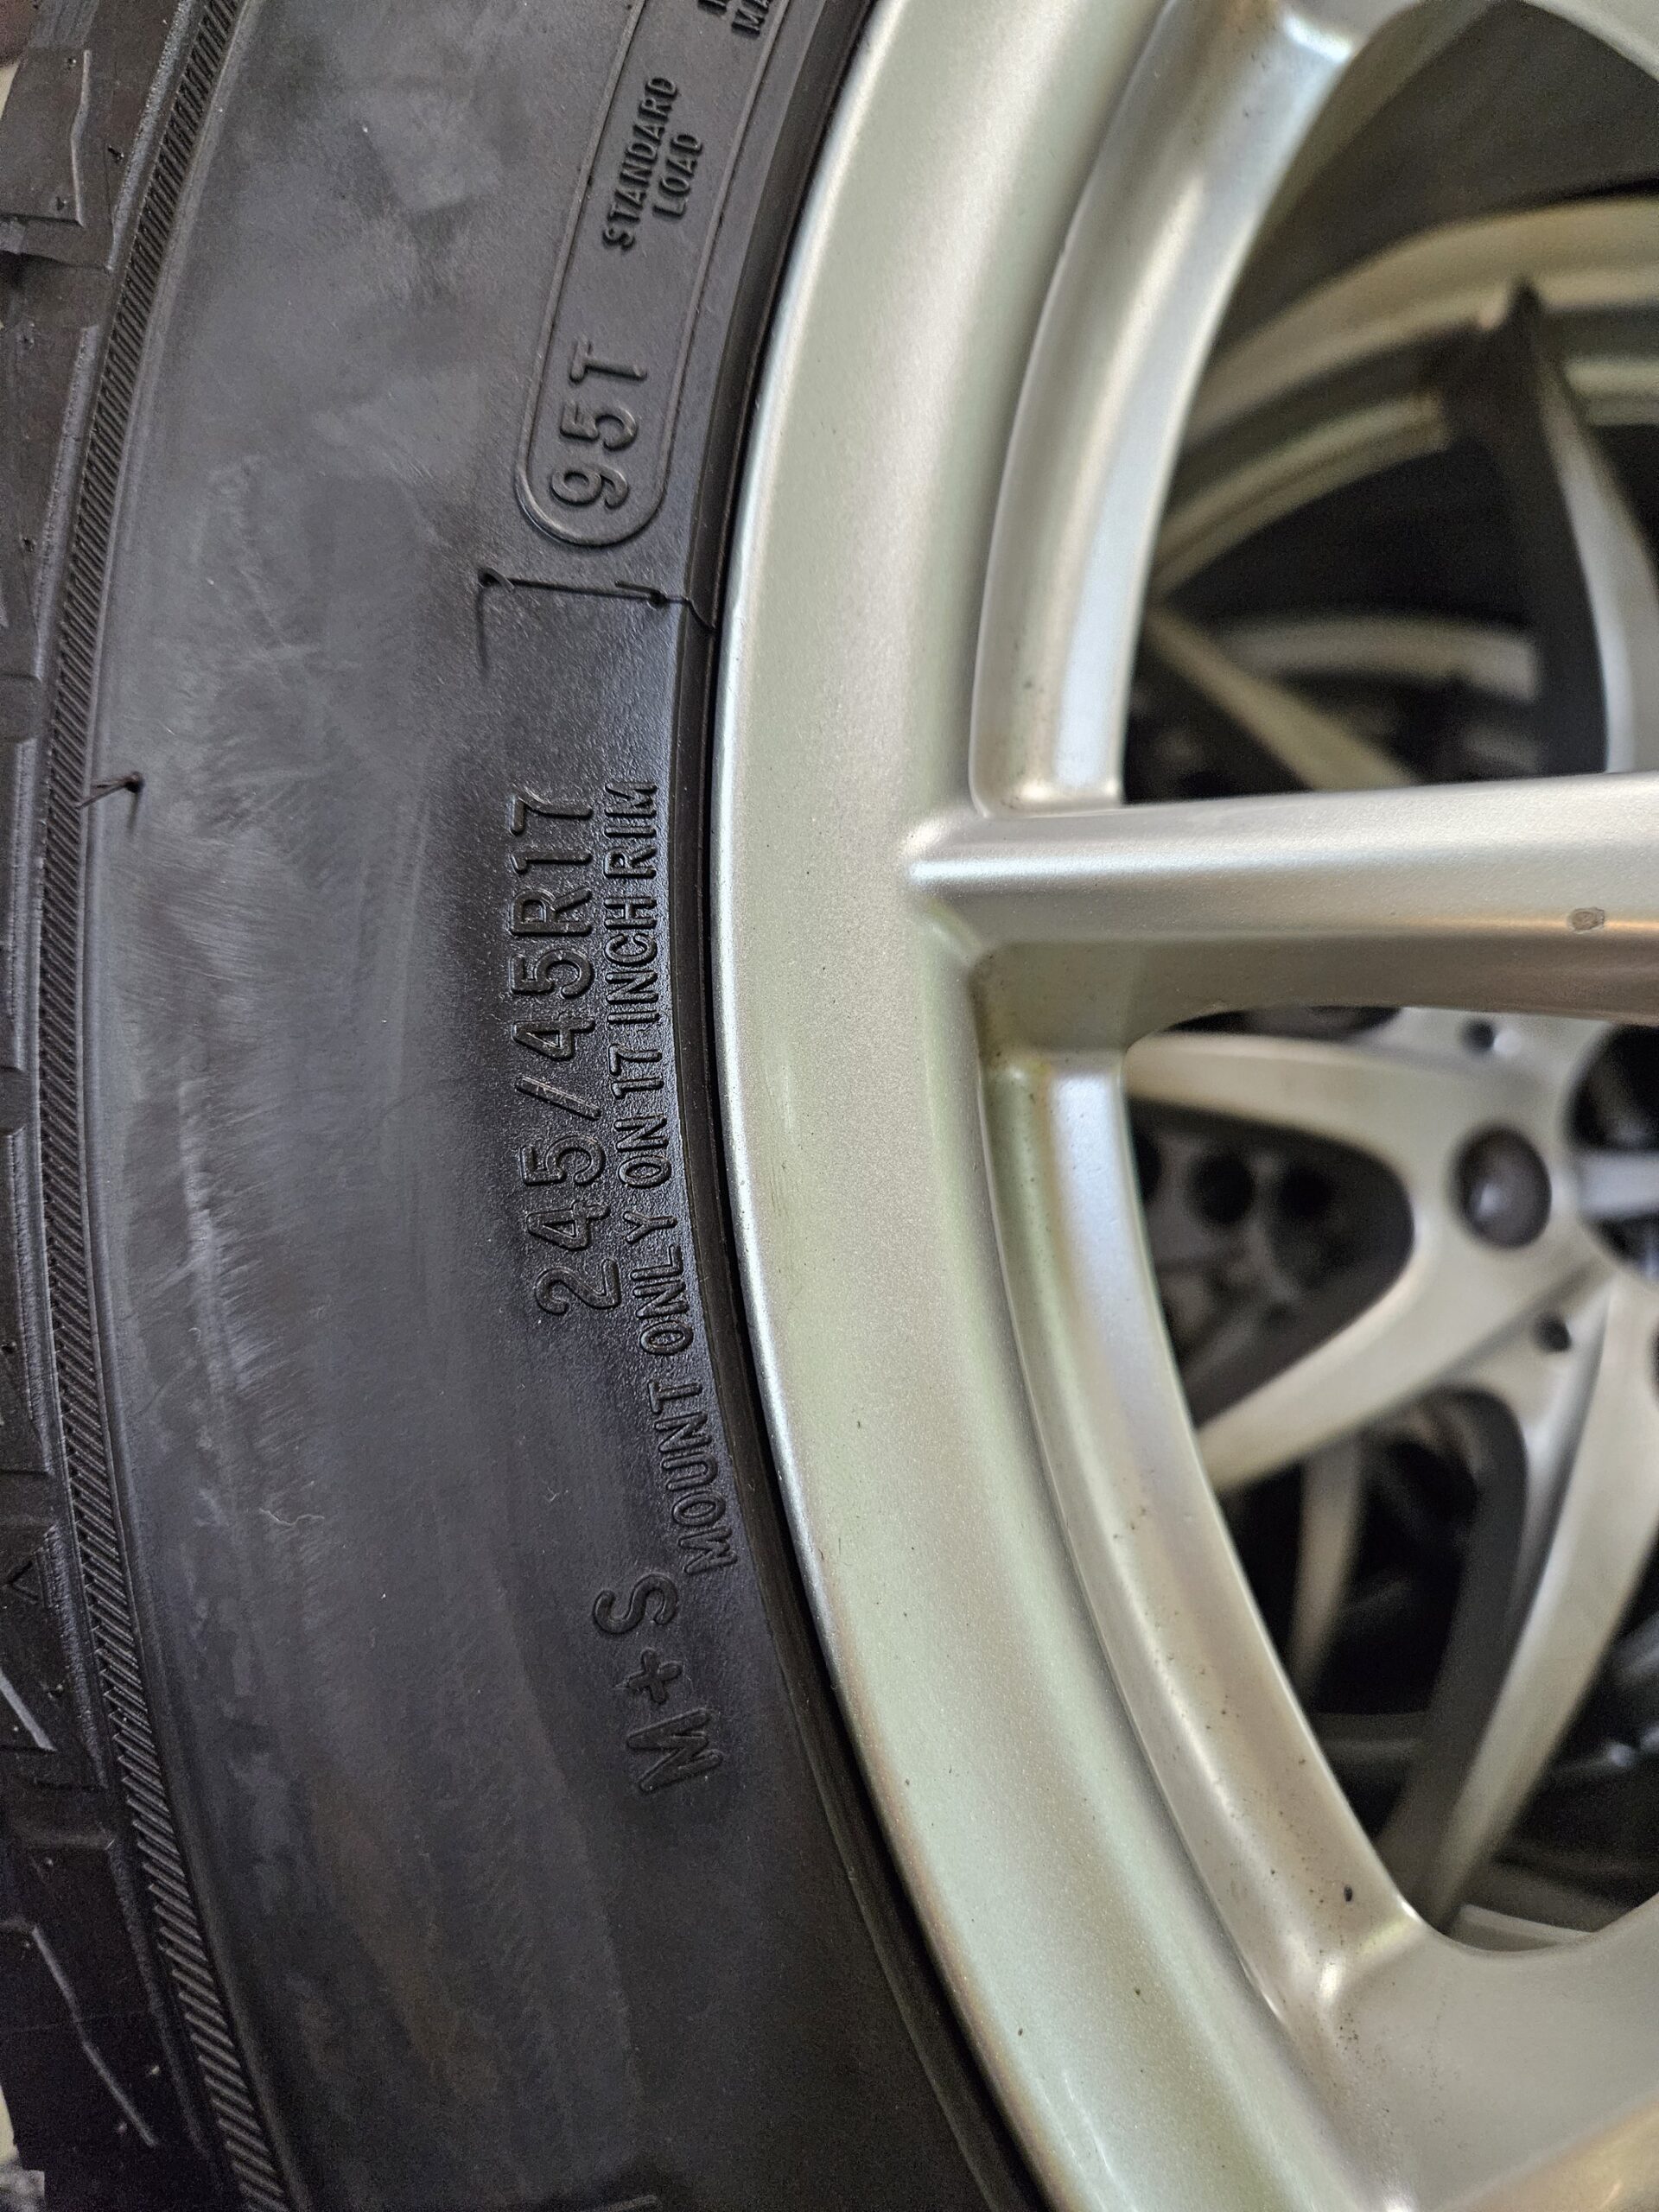 225/45R17 Starfire Snow Tires on Mercedes Rims